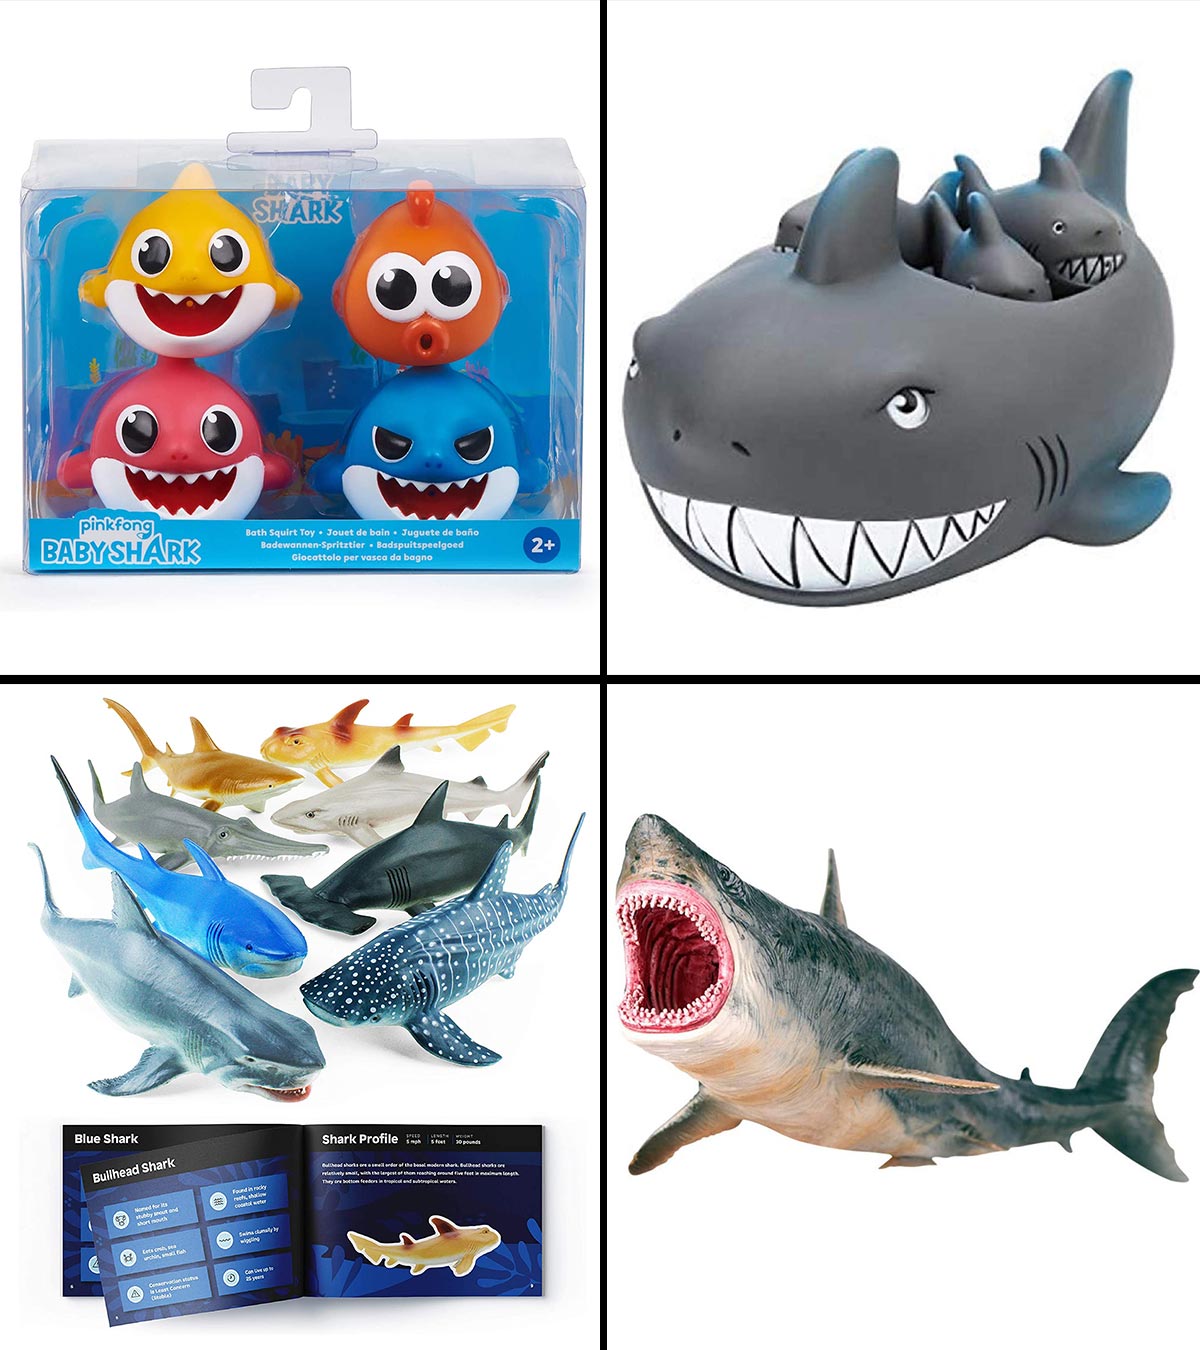 https://www.momjunction.com/wp-content/uploads/2021/07/11-Best-Shark-Toys-To-Play-In-2021-Banner-MJ-Recovered.jpg